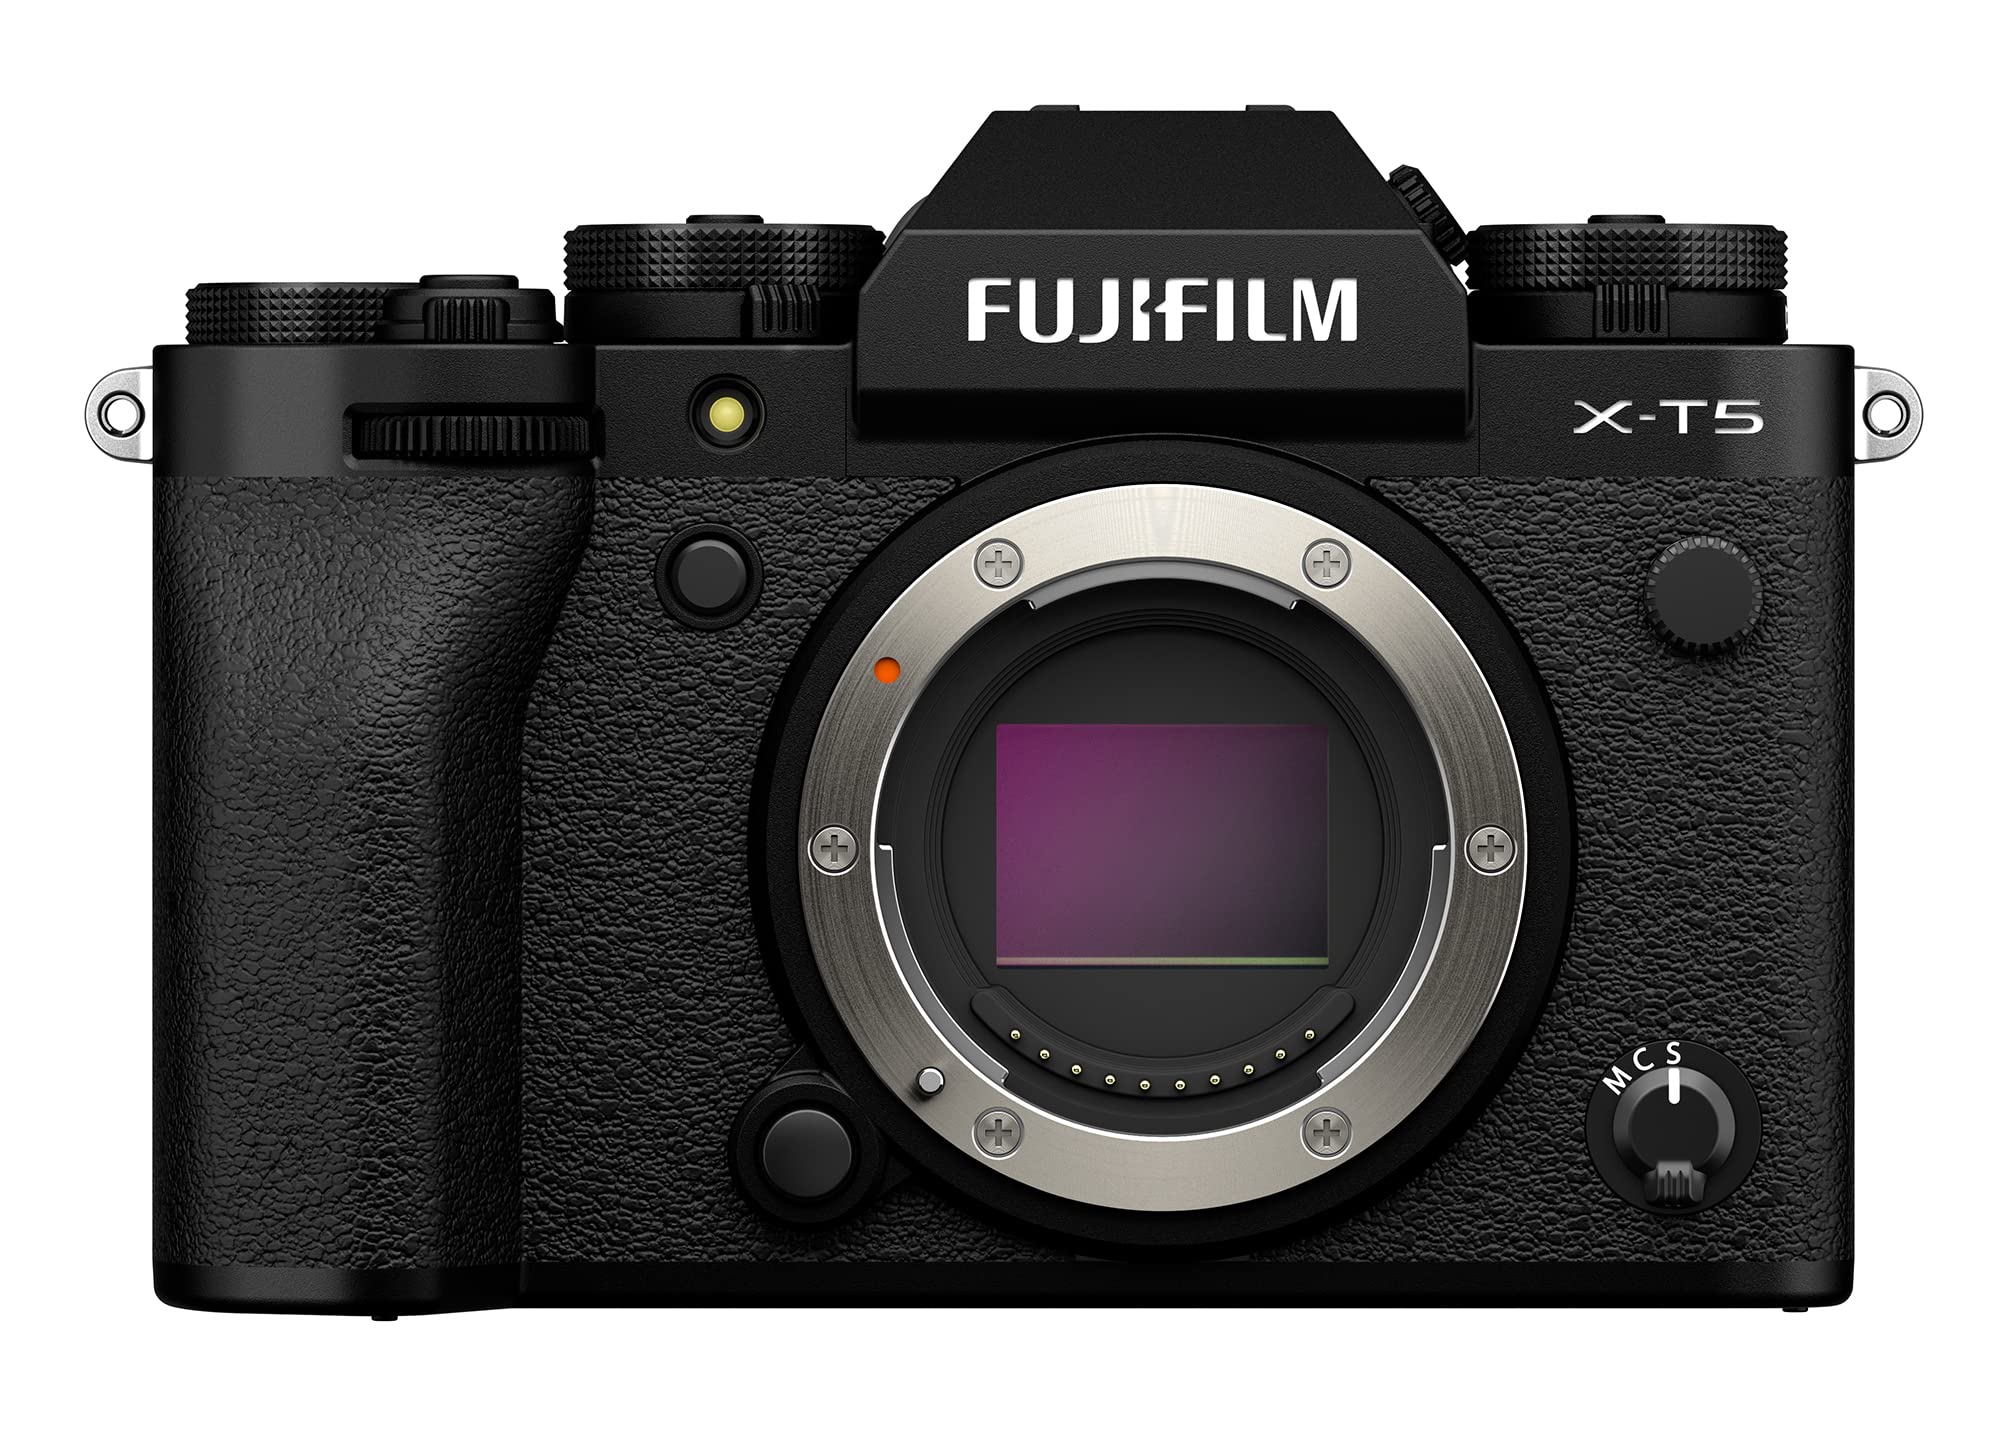 Fujifilm X-T5 Mirrorless Digital Camera Body - Black Black Body Only